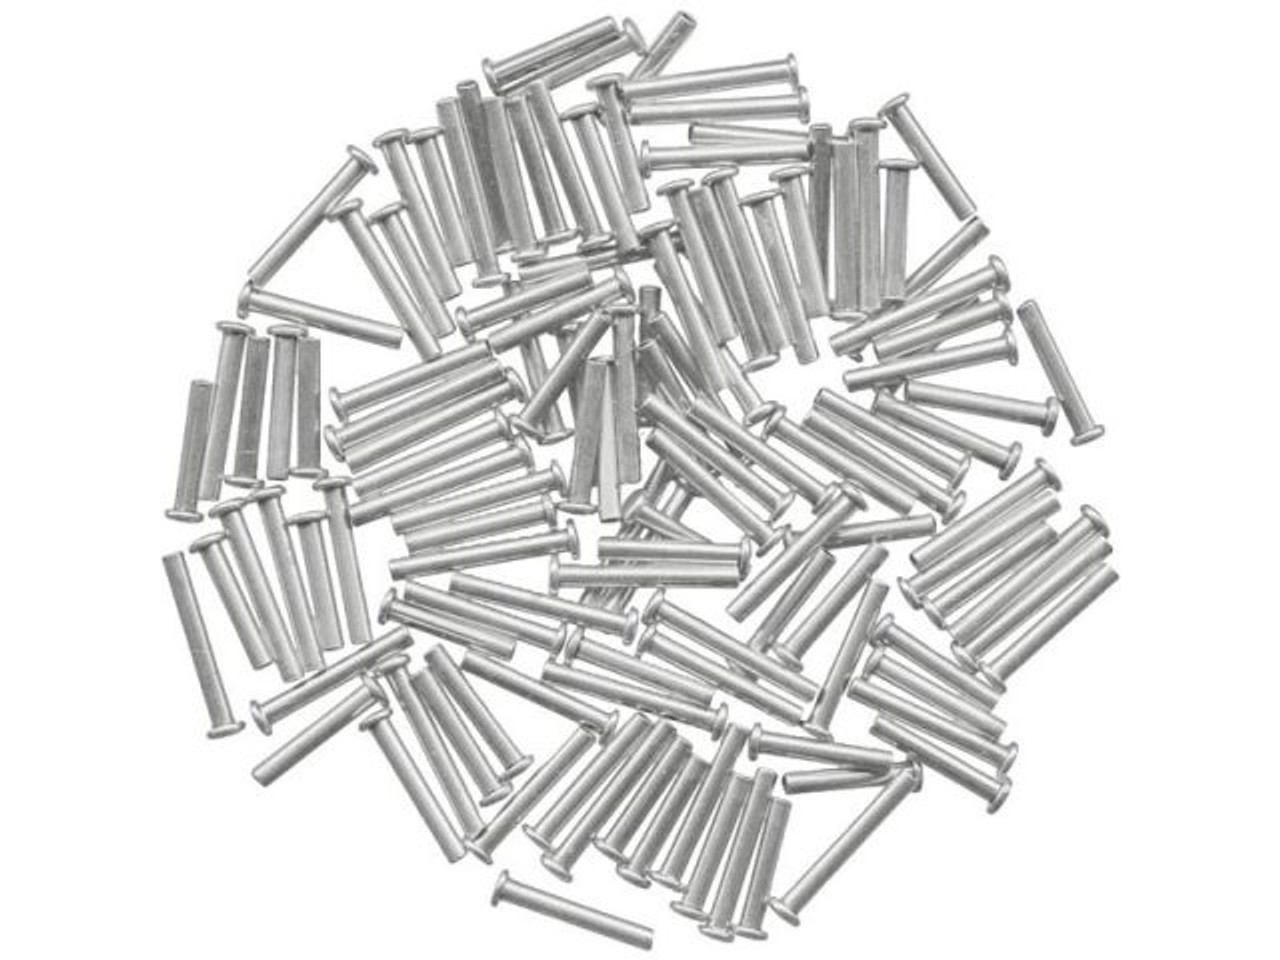 Assorted 1/16 Dia. Short Aluminum Rivets (100 pcs.) - Metal Clay & Crafted  Findings